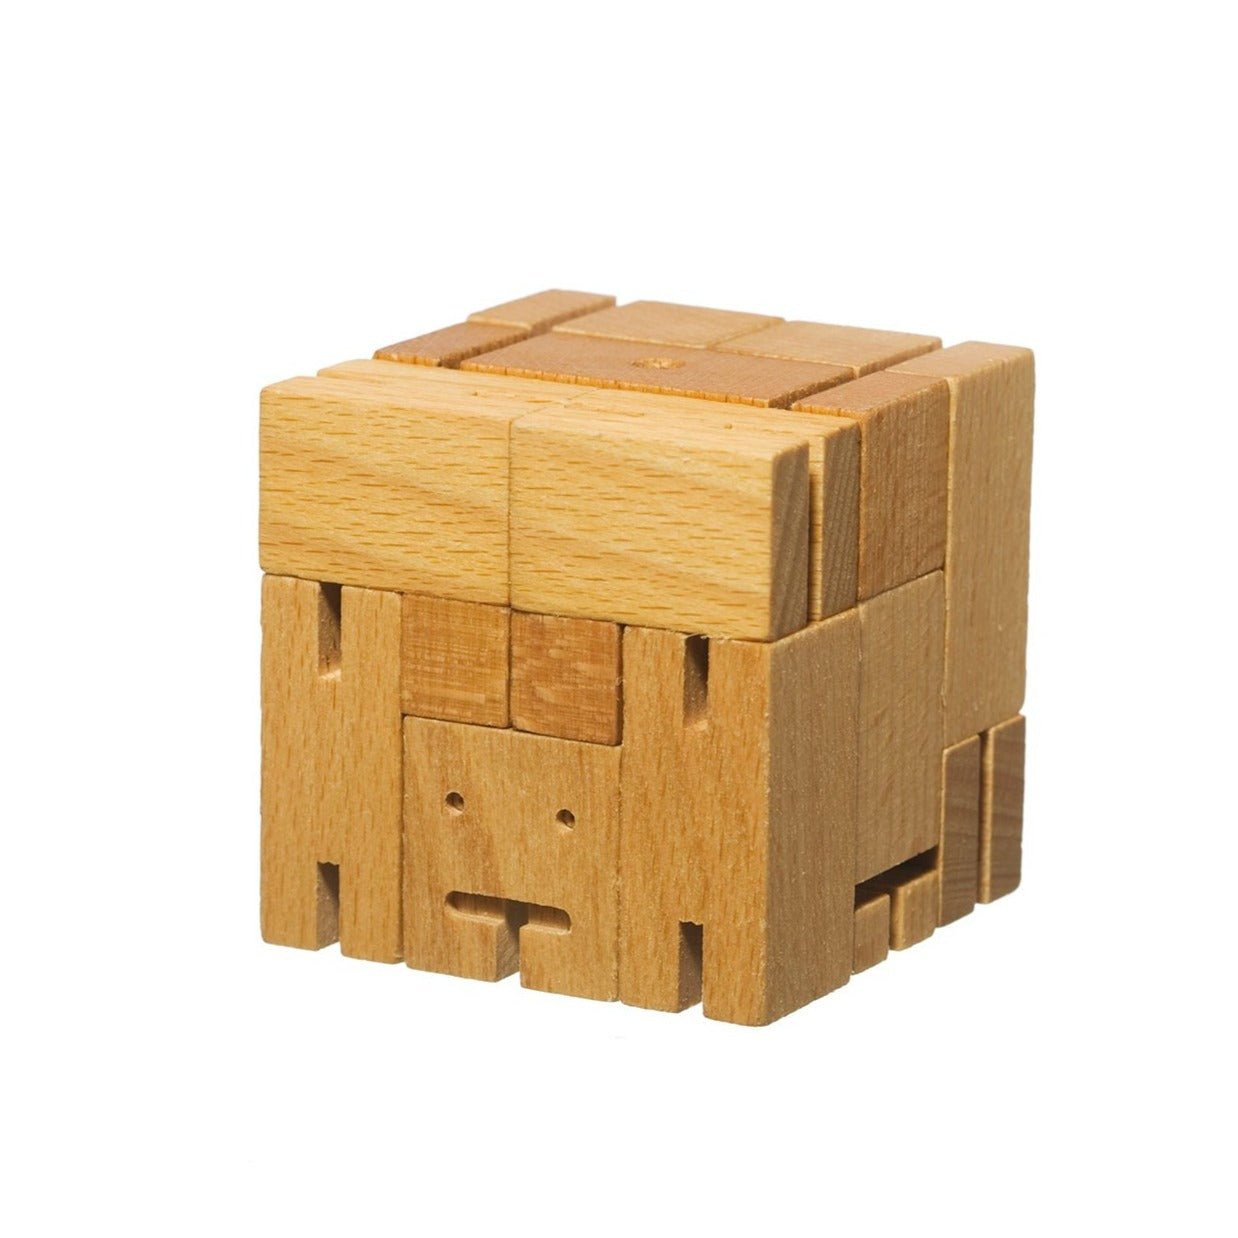 Cubebot natural wooden robot